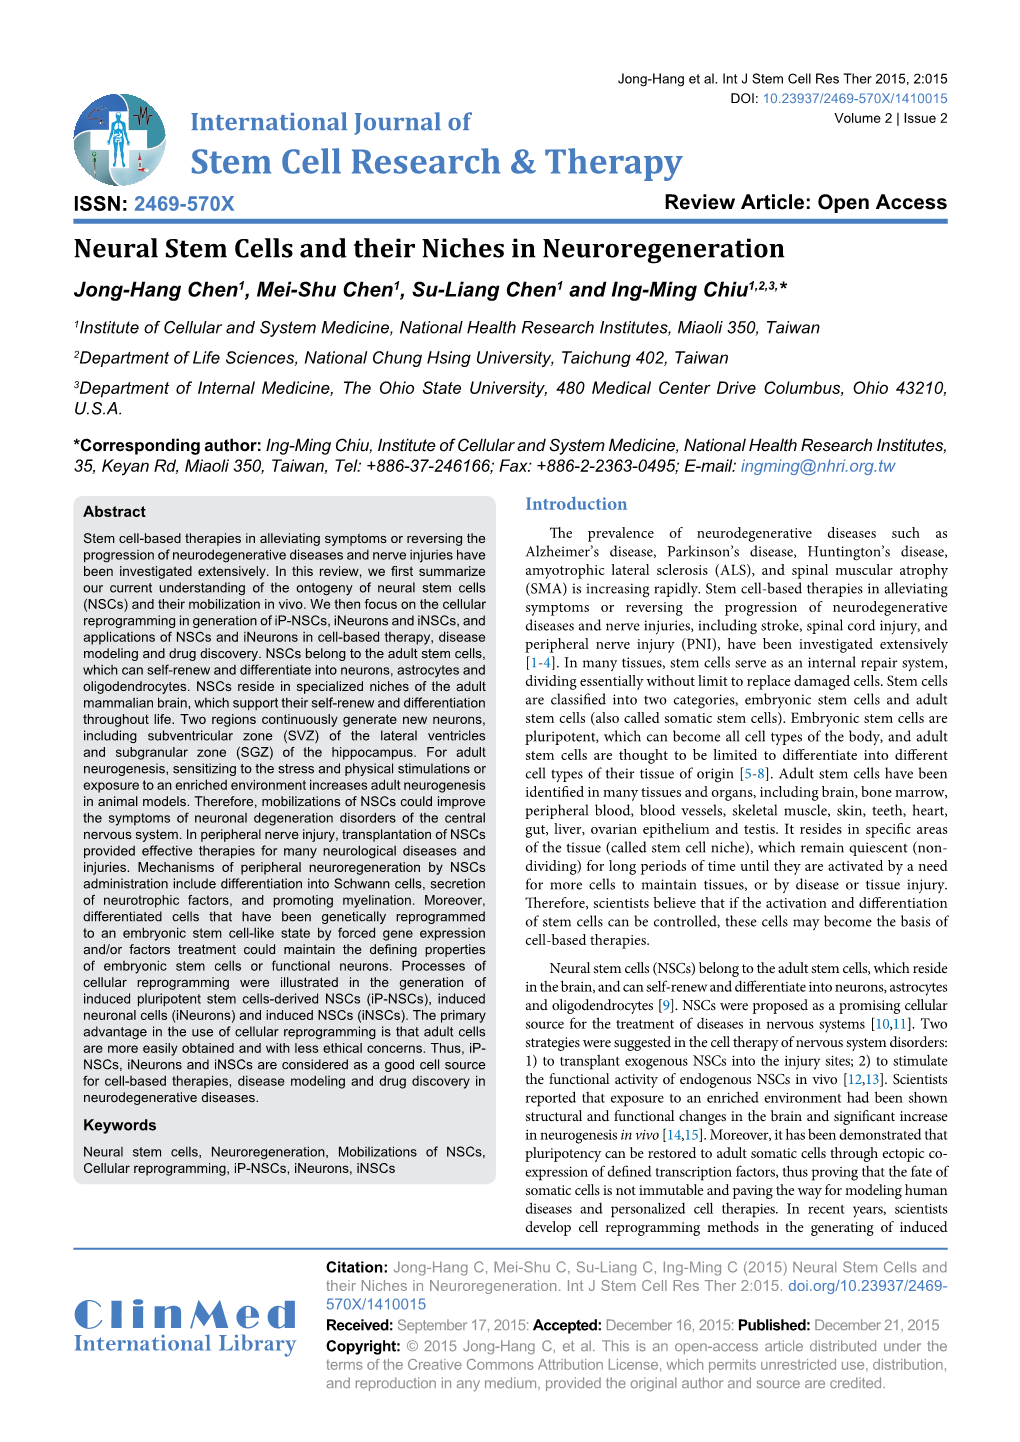 Neural Stem Cells and Their Niches in Neuroregeneration Jong-Hang Chen1, Mei-Shu Chen1, Su-Liang Chen1 and Ing-Ming Chiu1,2,3,*